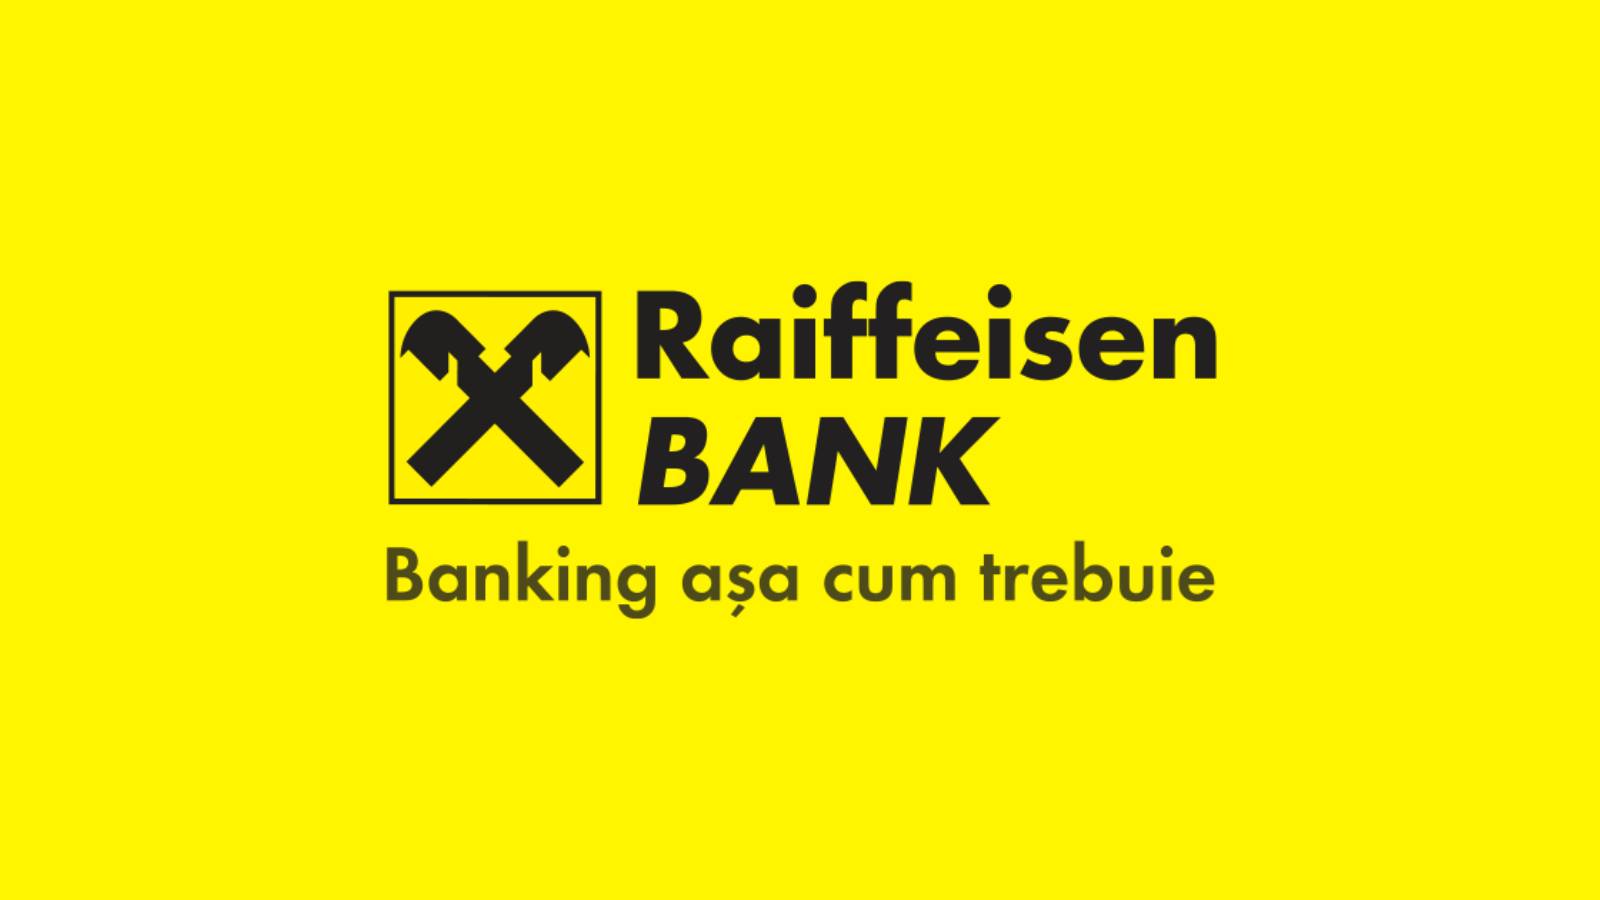 Raiffeisen Bank Official Decision FREE make Summer more Beautiful